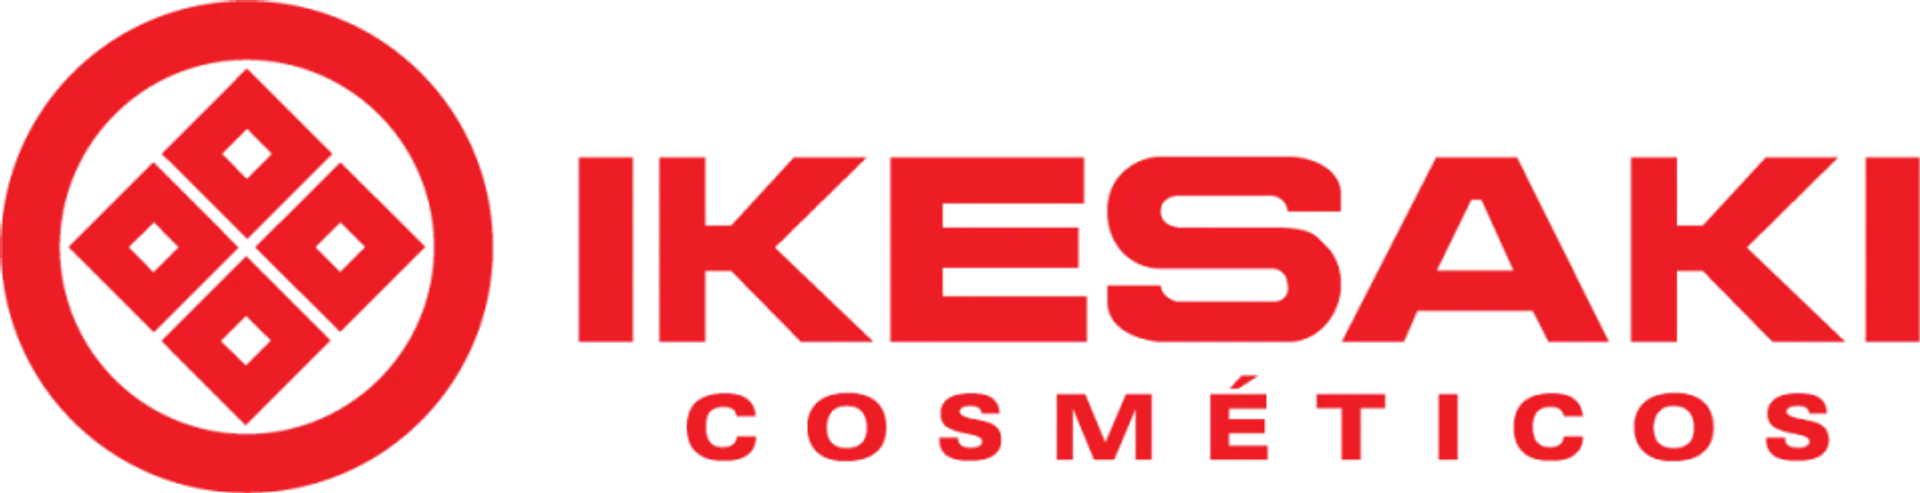 IKESAKI logo